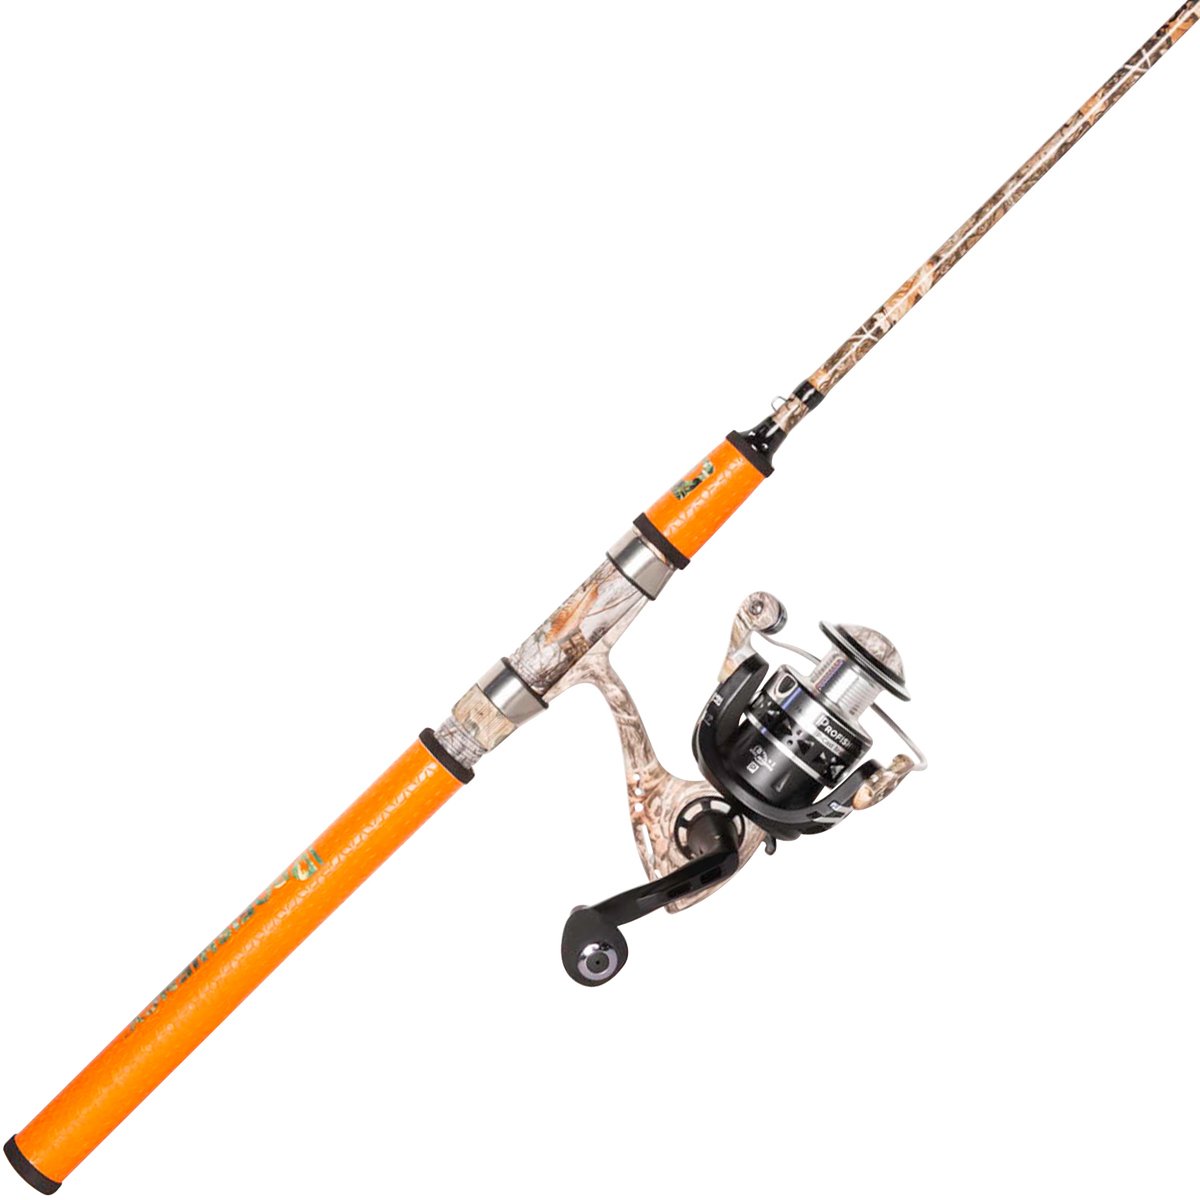  Toddmomy 8 Sets Fishing Rod Protector Fishing Tools